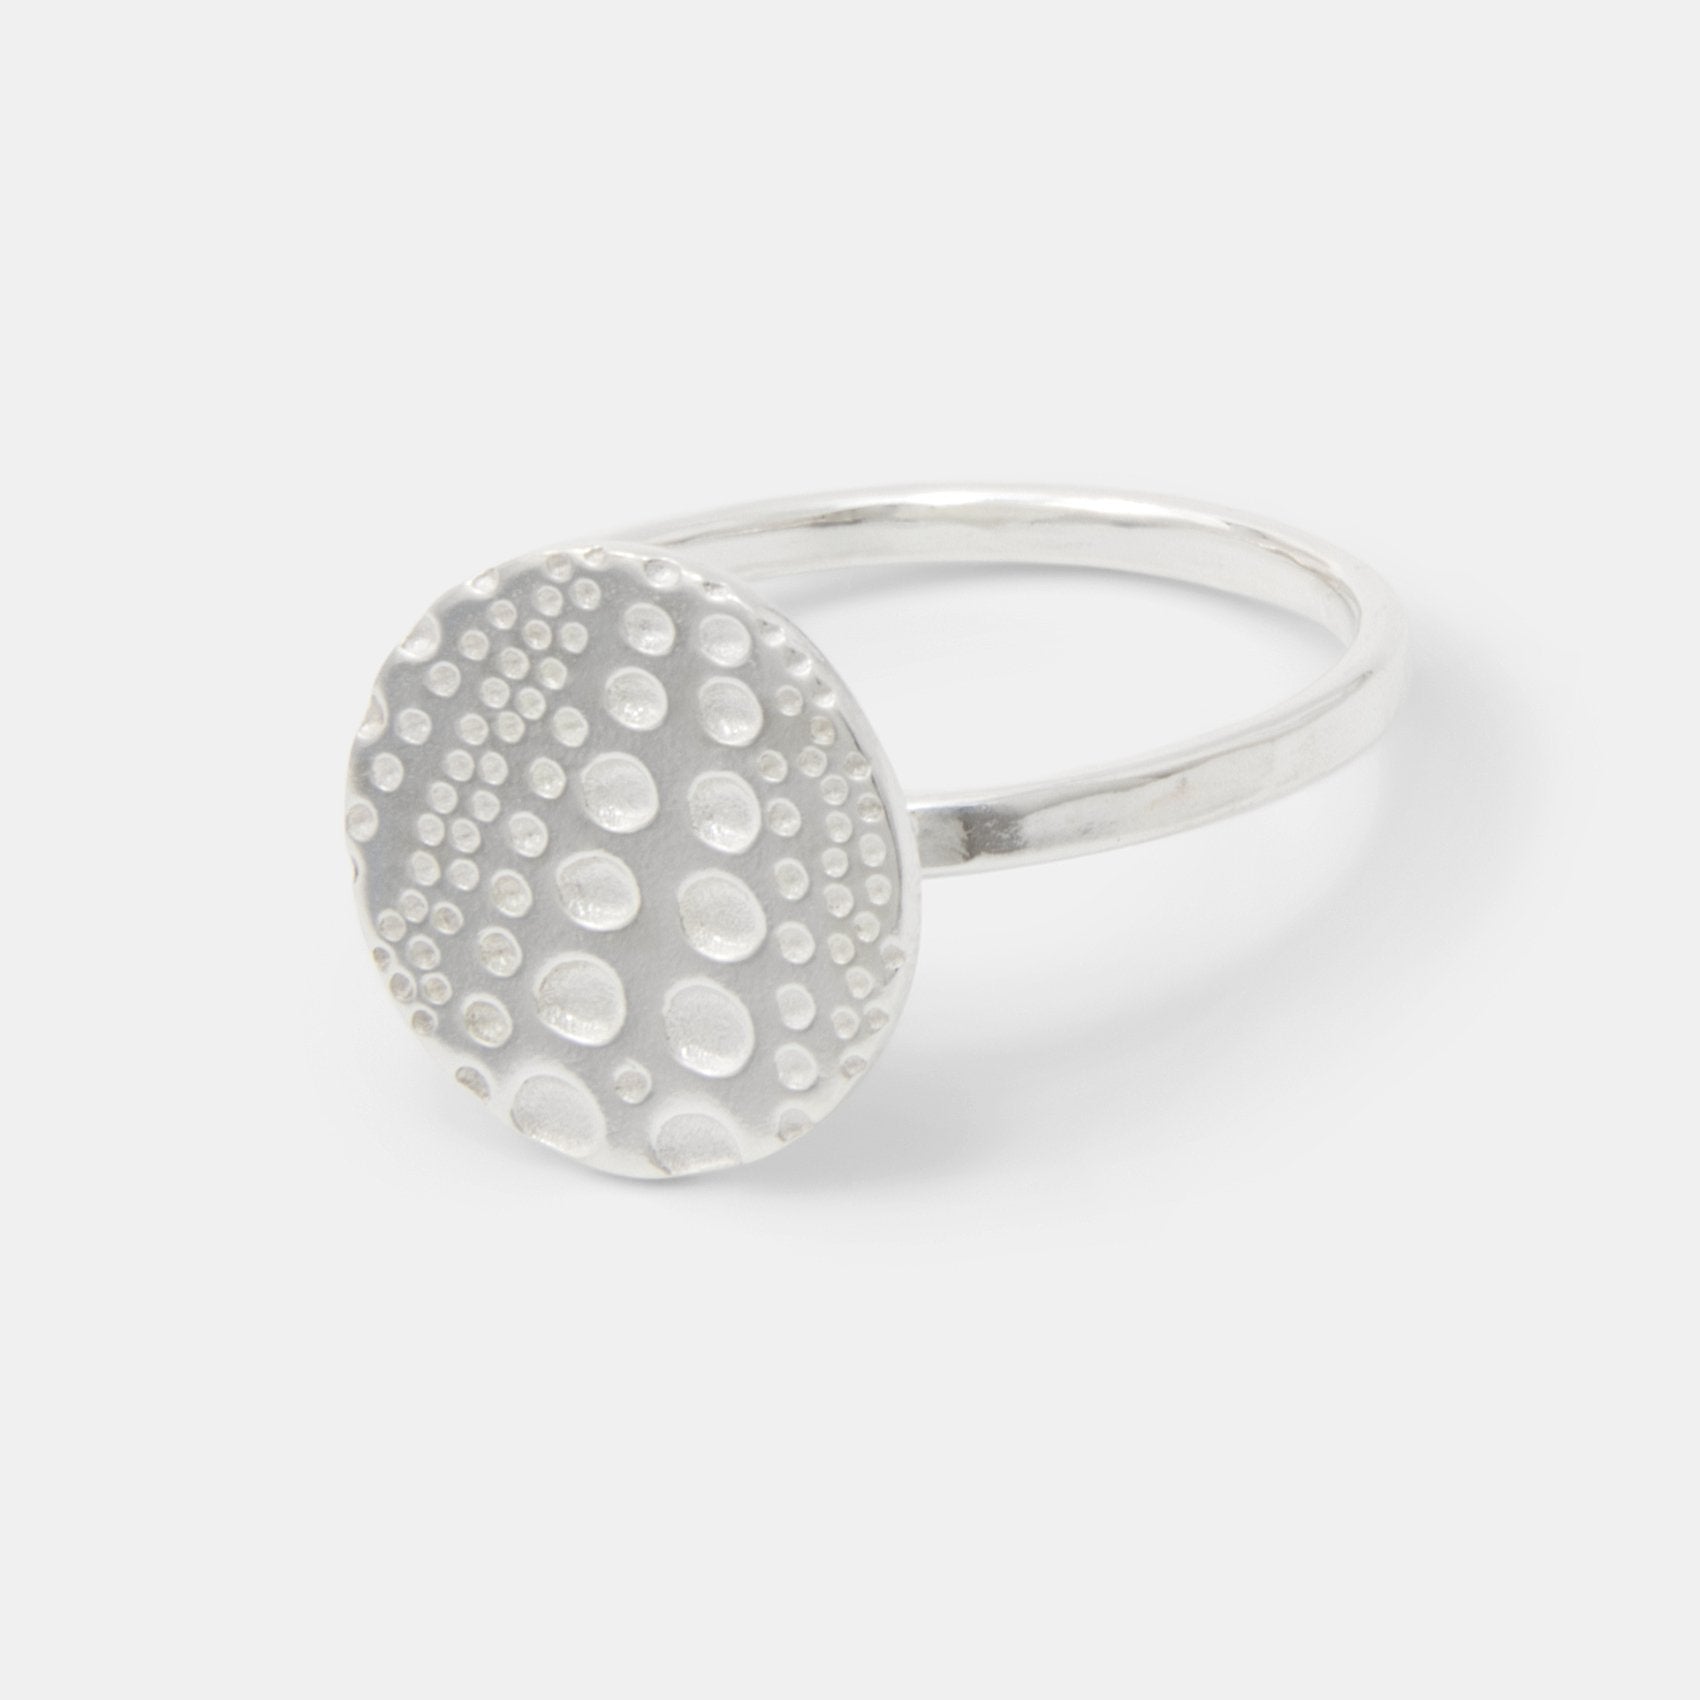 Sea urchin texture silver cocktail ring - Simone Walsh Jewellery Australia